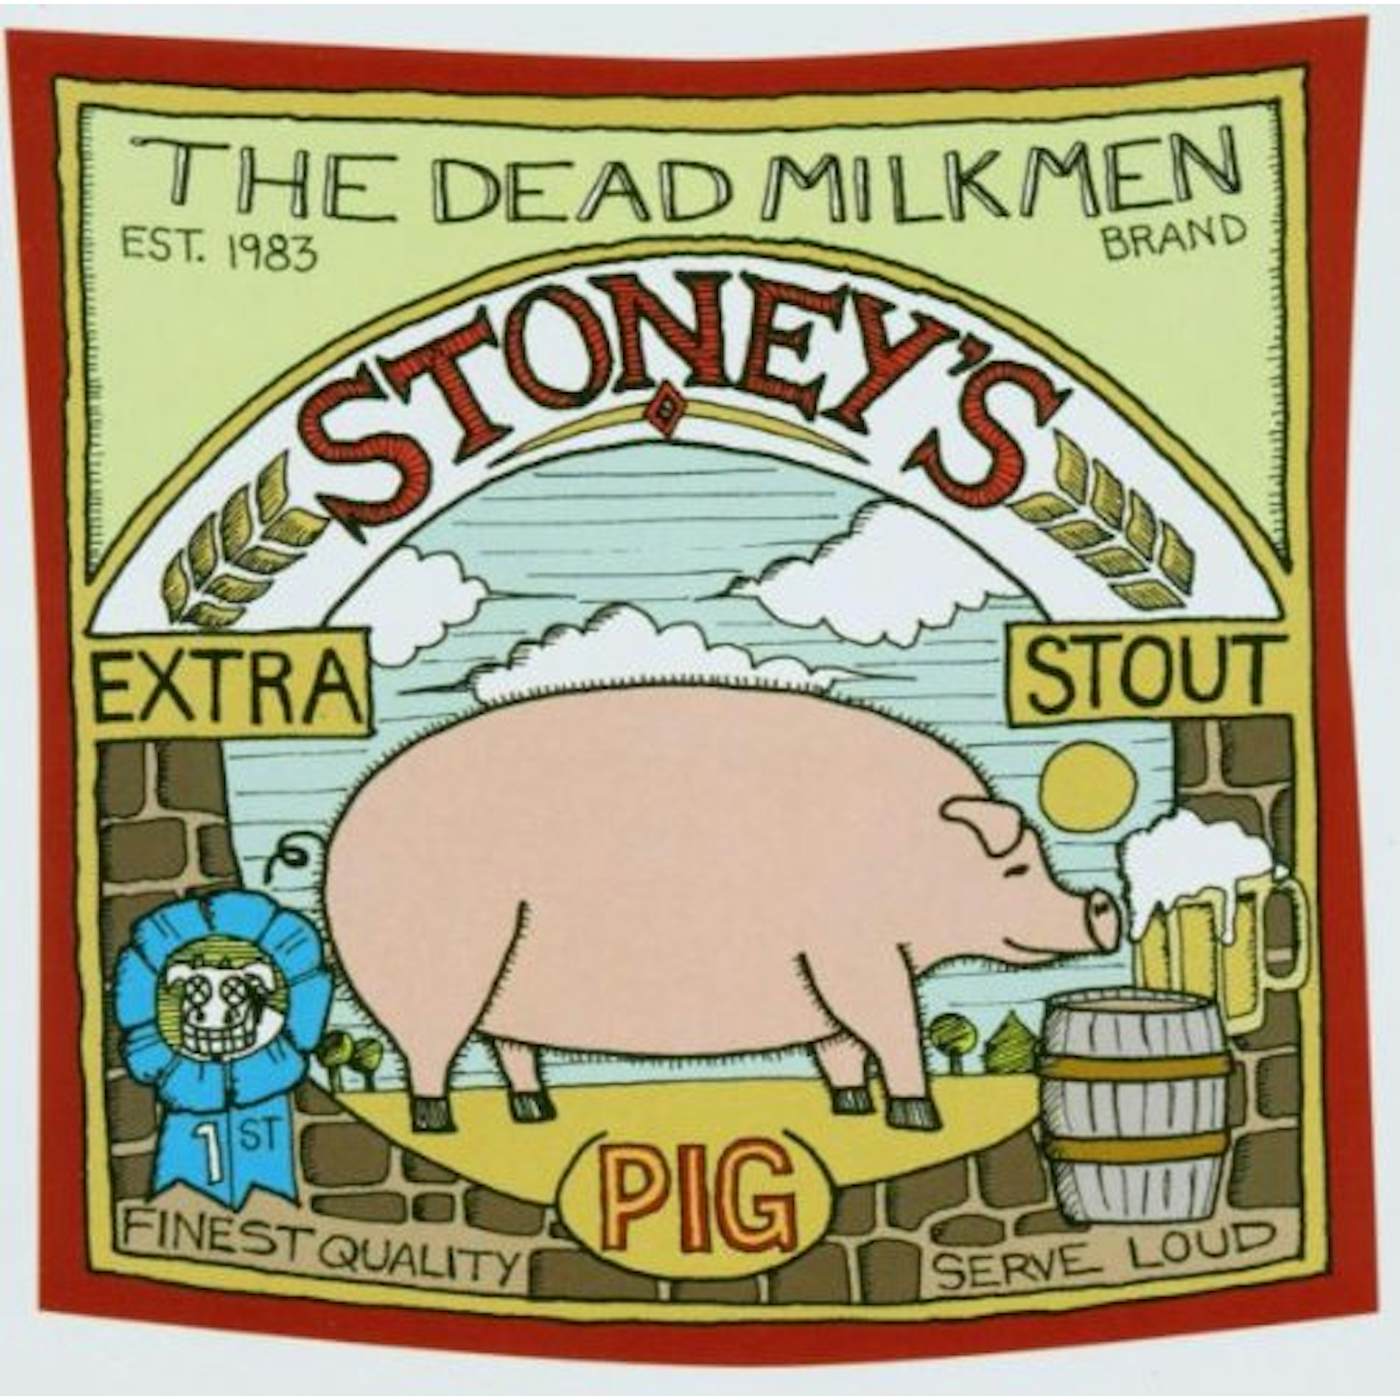 The Dead Milkmen STONEY'S EXTRA STOUT (PIG) CD